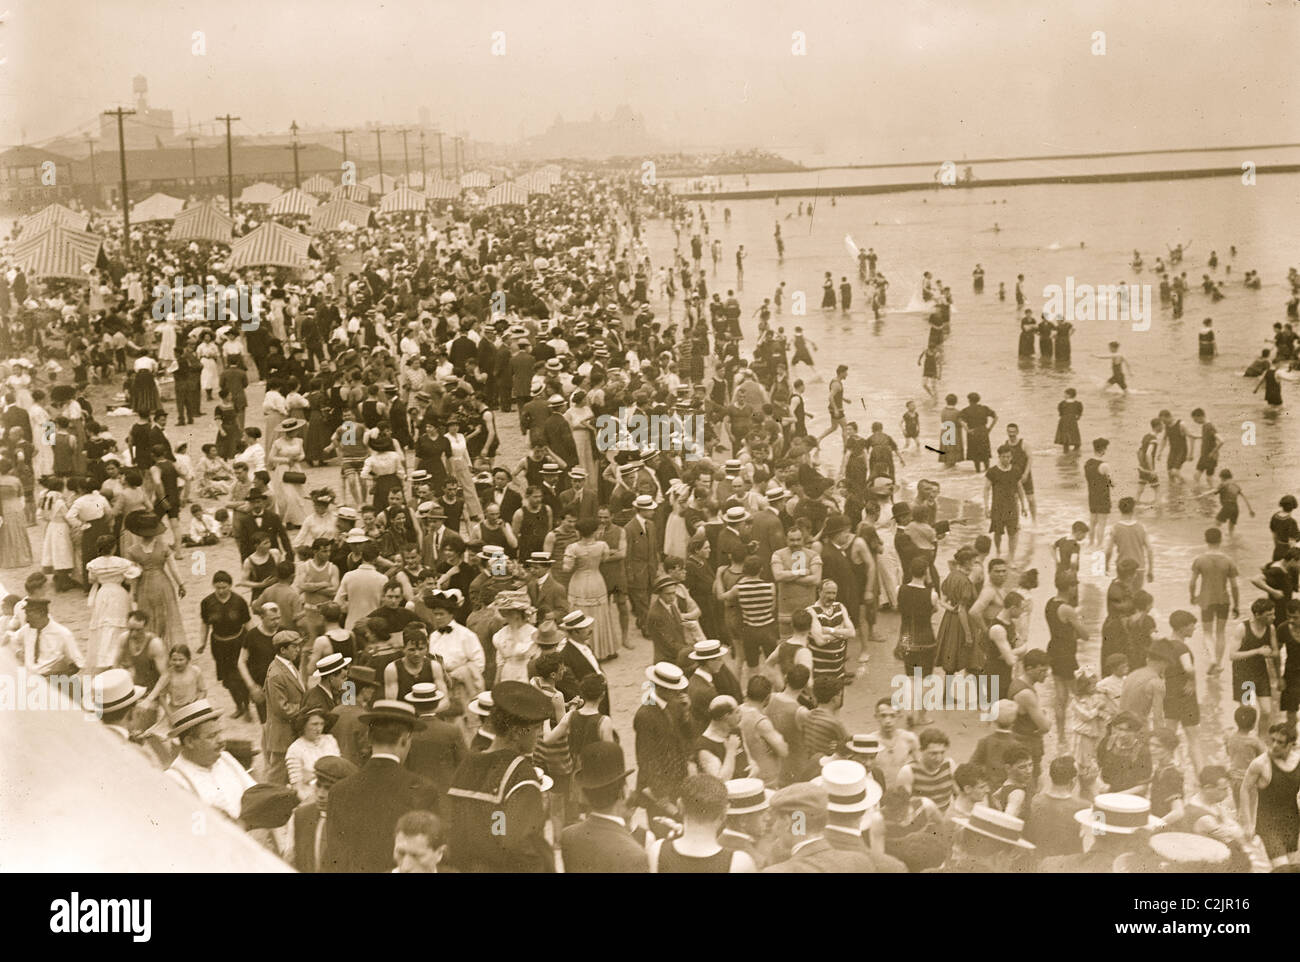 Crowds on the beach at Coney Island, New York Stock Photo - Alamy